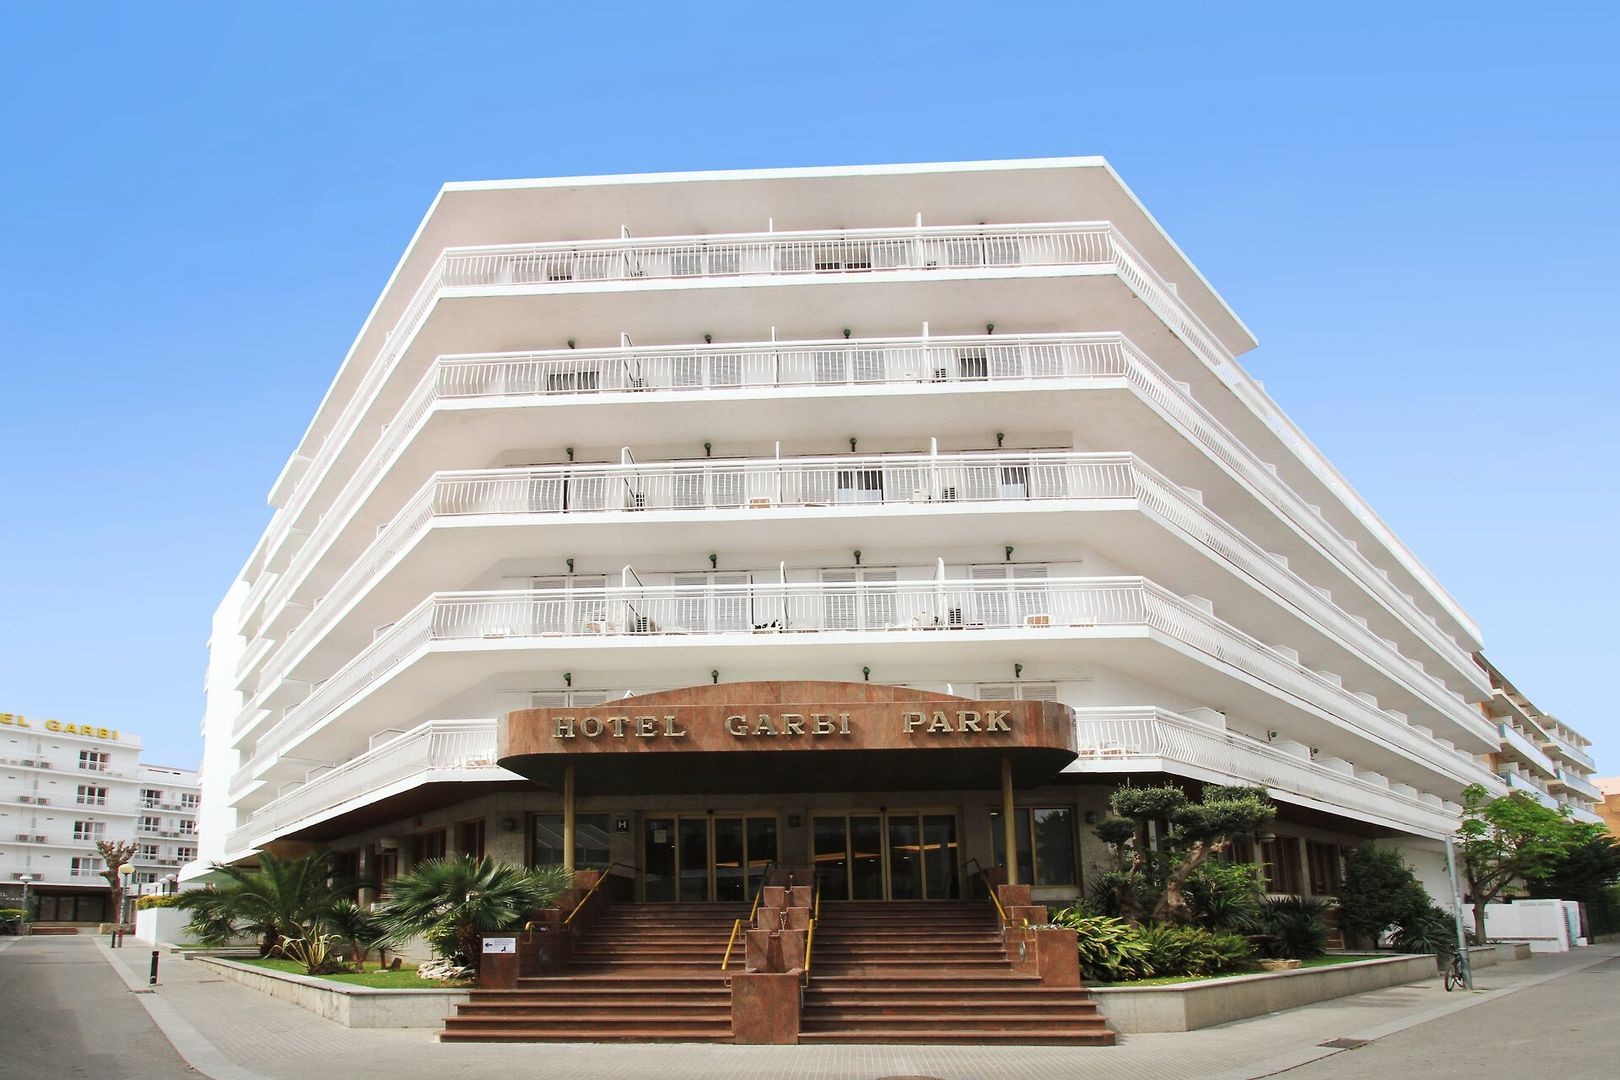 Obrázek hotelu Garbi Park